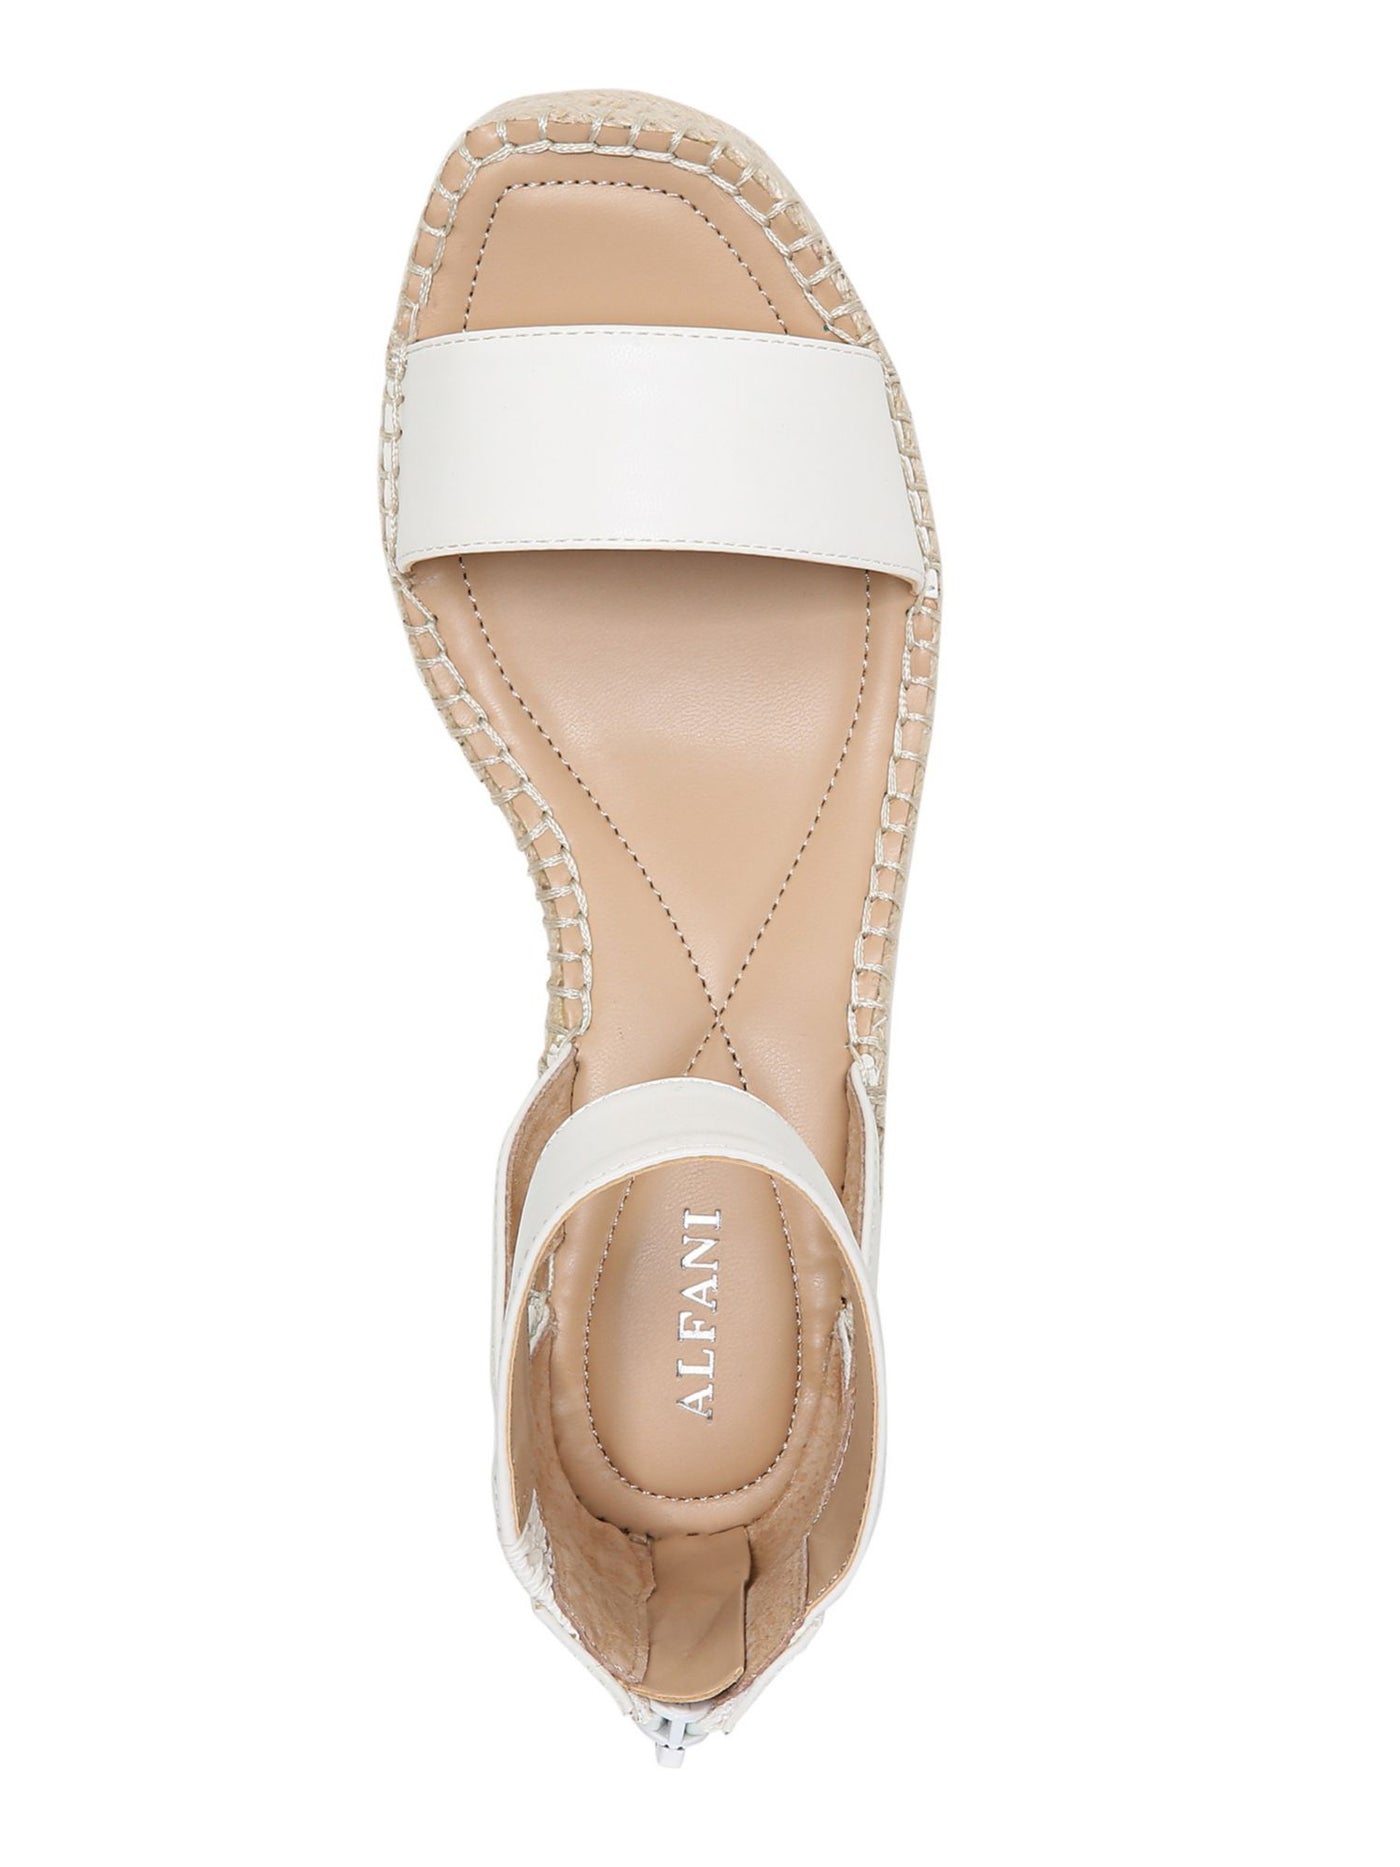 ALFANI Womens White Ankle Strap Padded Cohjo Round Toe Wedge Zip-Up Espadrille Shoes 9.5 M